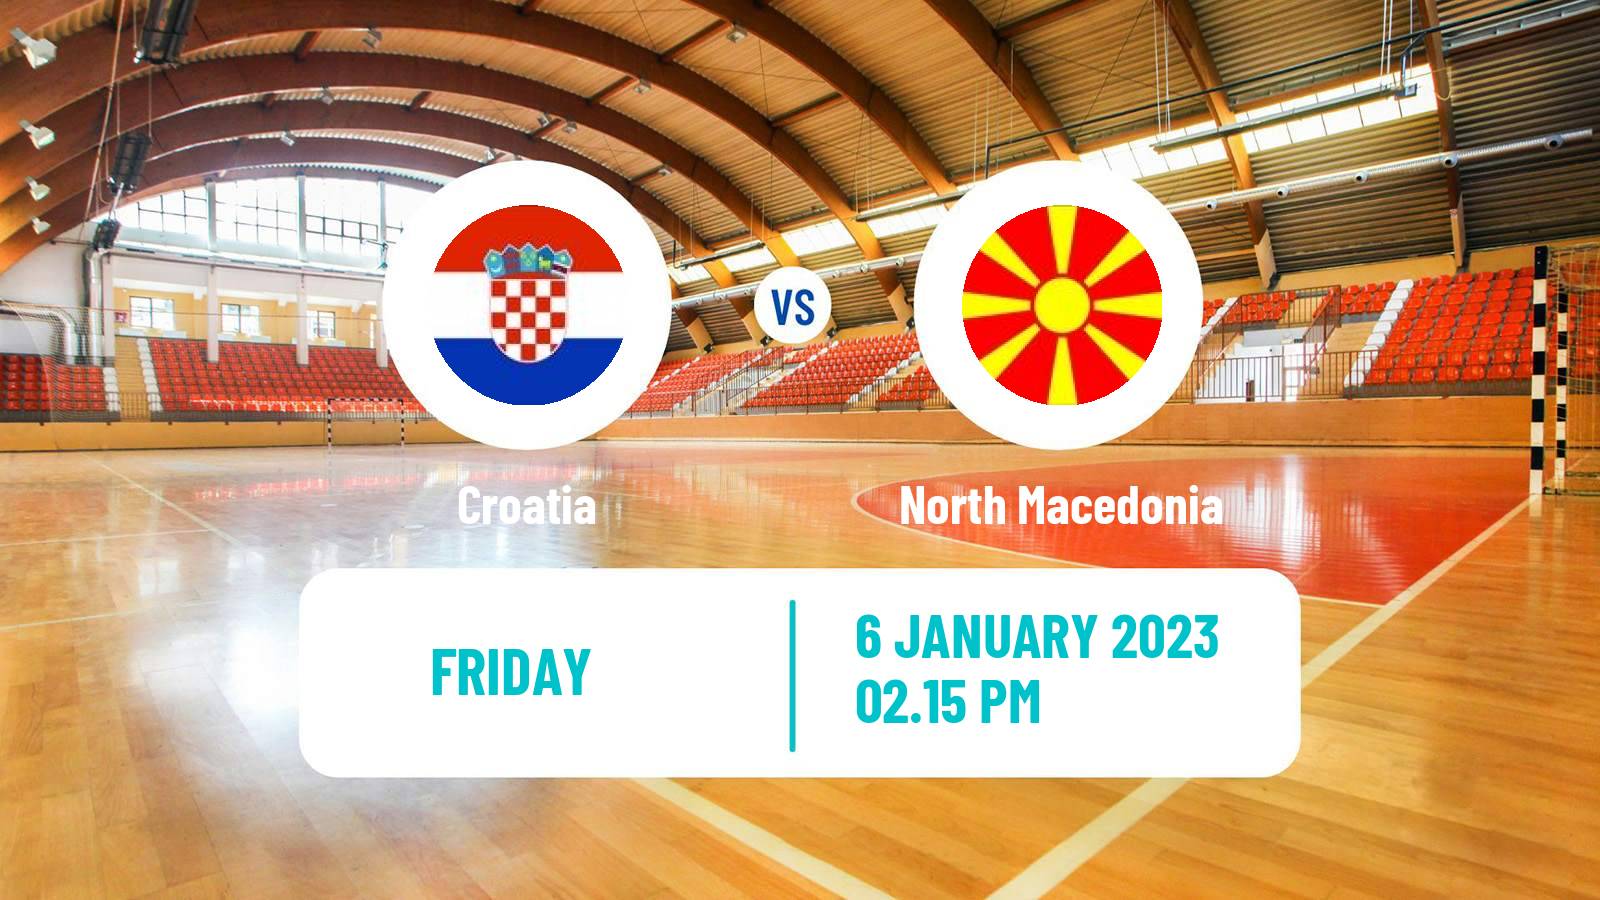 Handball Friendly International Handball Croatia - North Macedonia